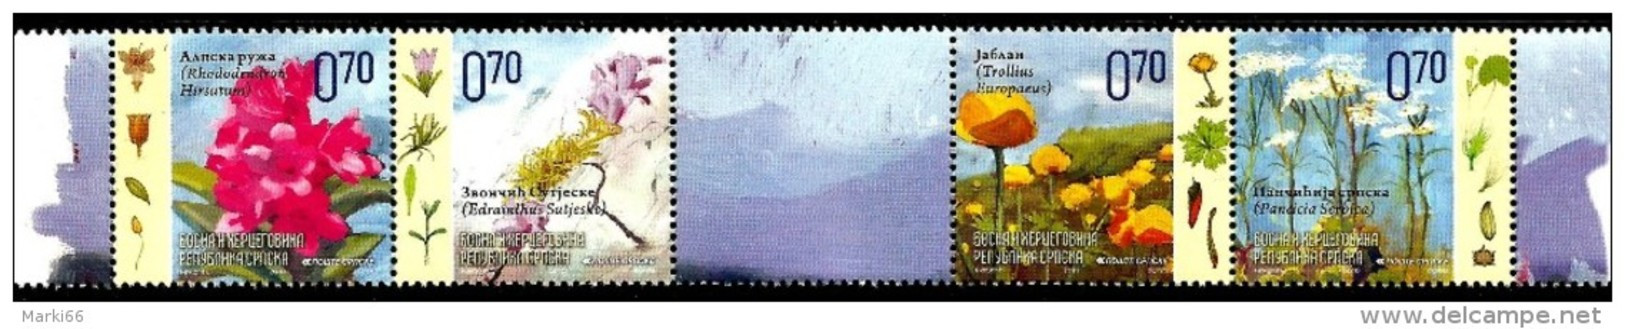 Bosnia & Herzegovina - Republika Srpska - 2010 - Endemic Wild Flowers - Mint Stamp Set (se-tenant Strip) - Bosnia Herzegovina